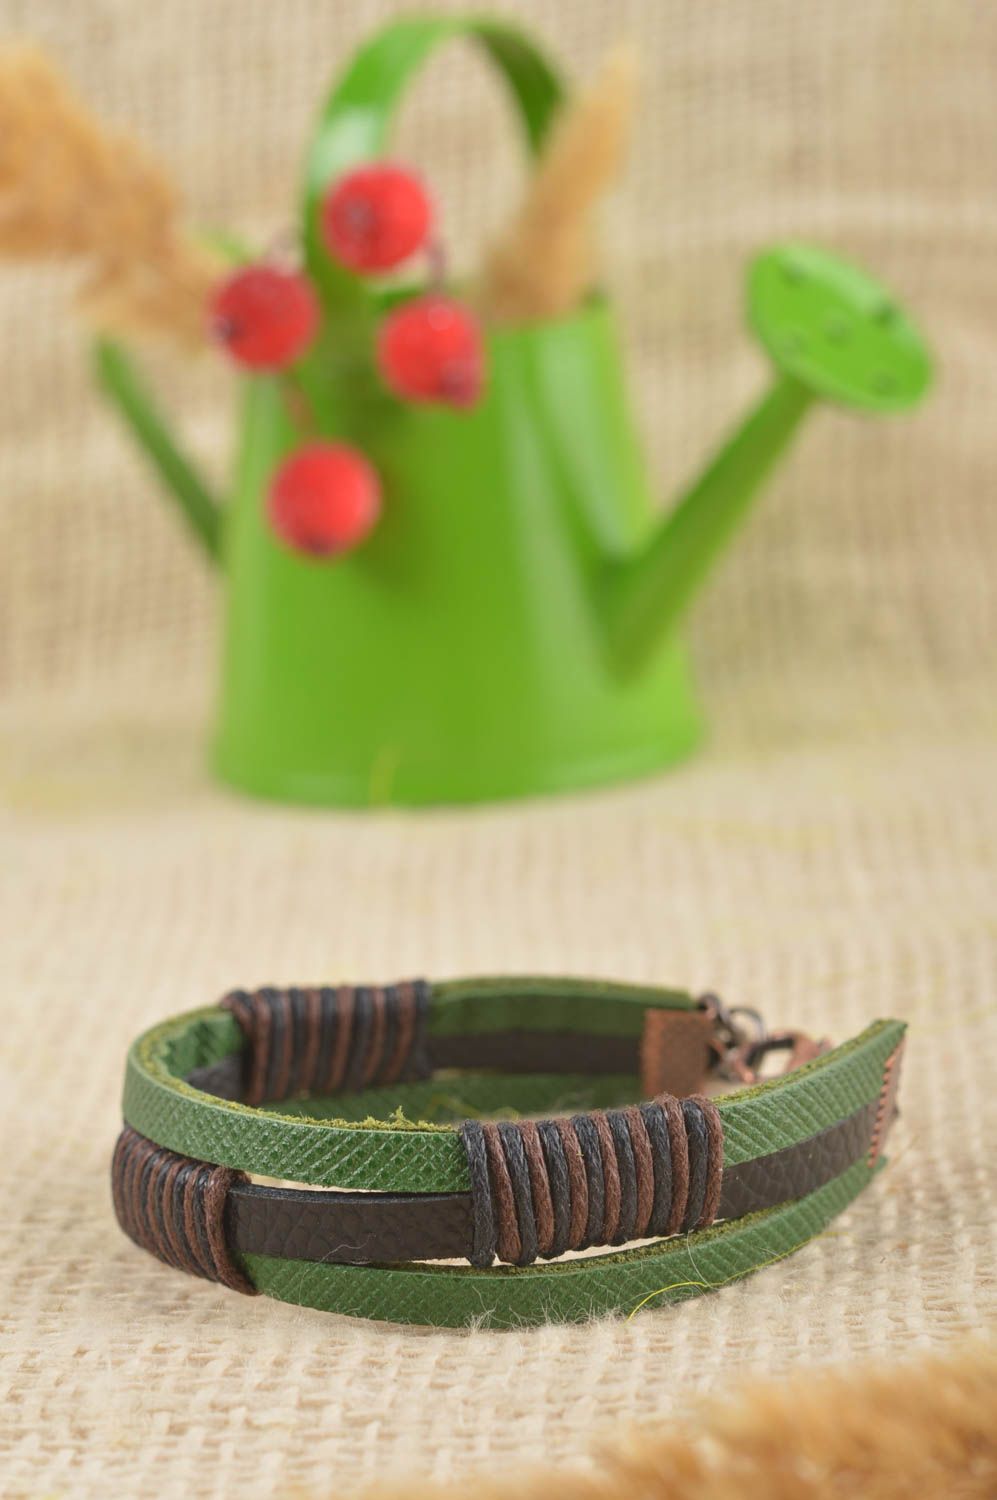 Stylish handmade leather bracelet designs leather goods fashion accessories photo 1